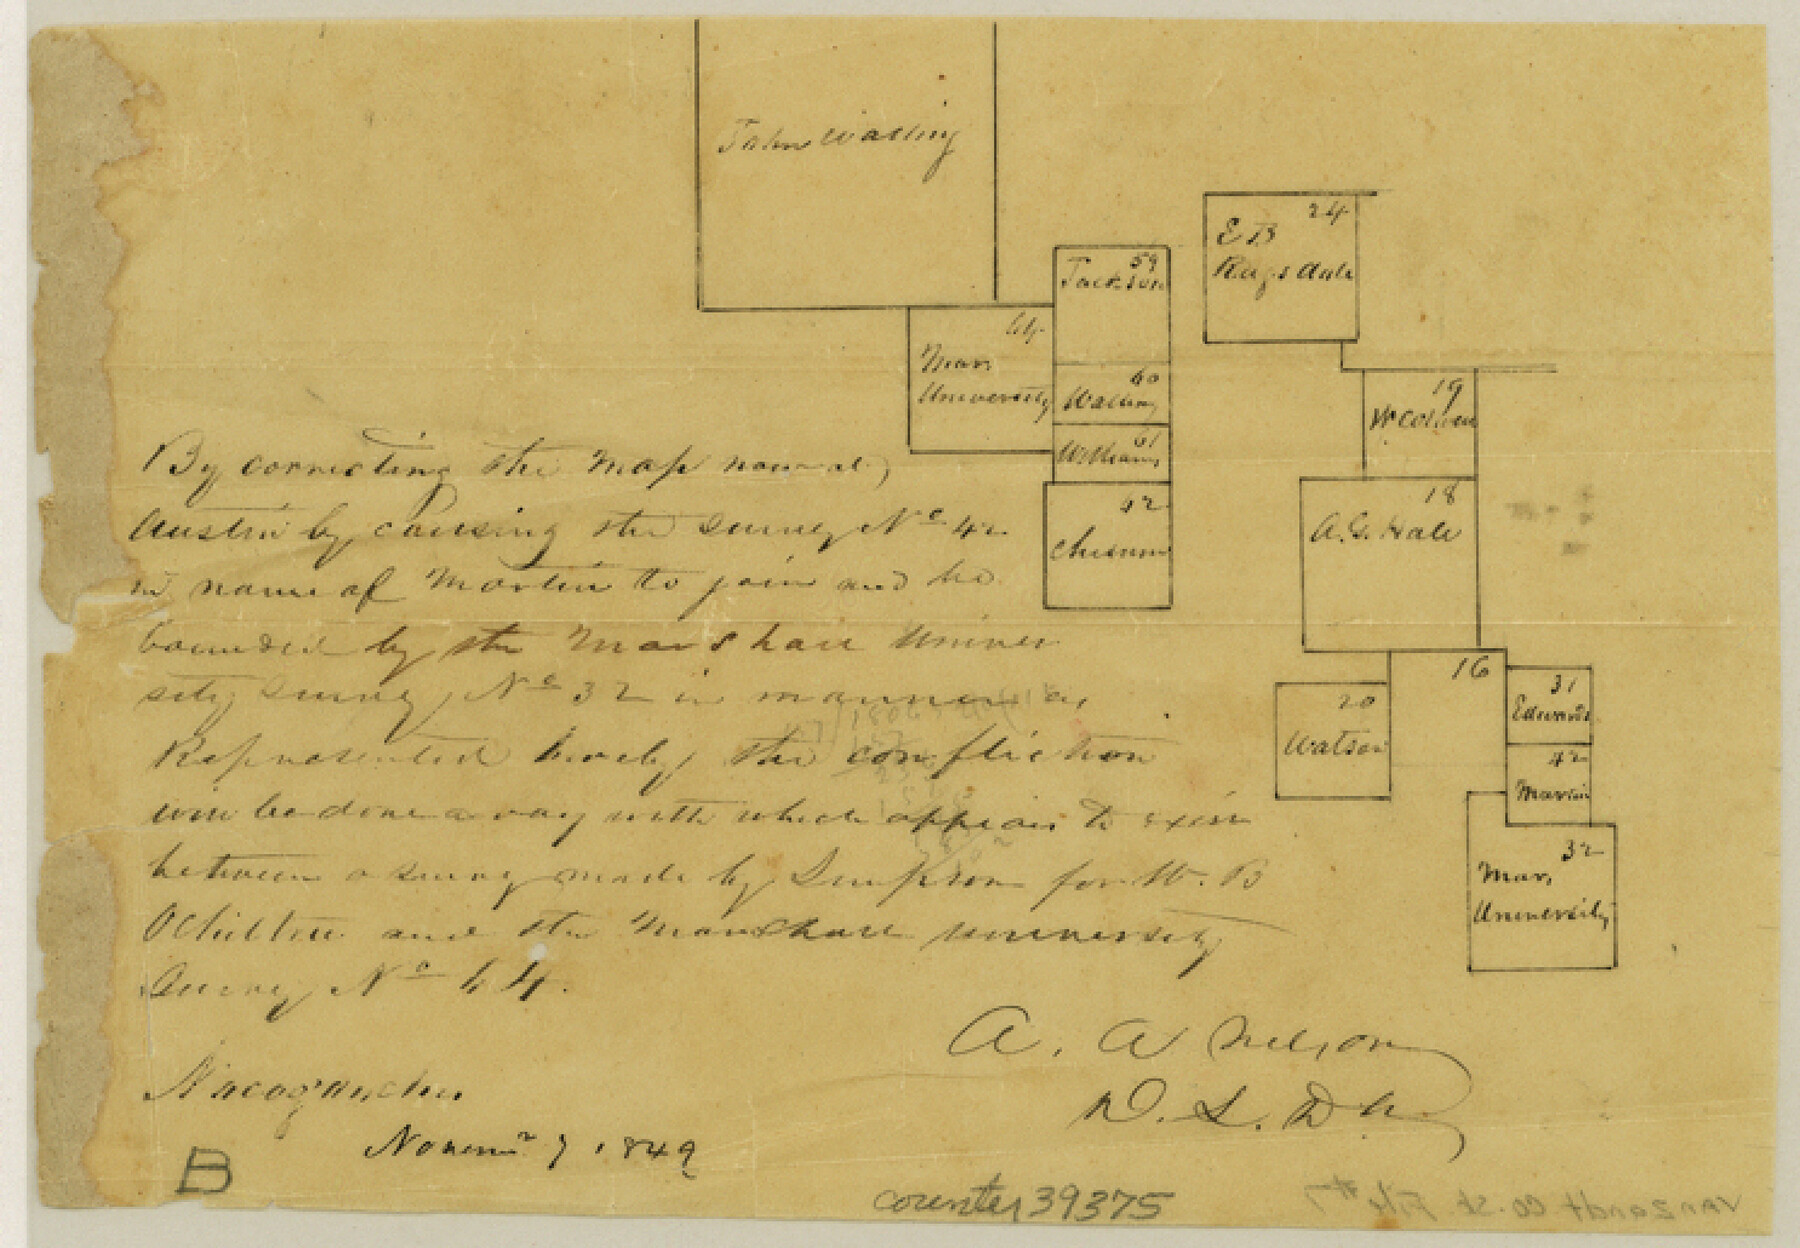 39375, Van Zandt County Sketch File 7, General Map Collection